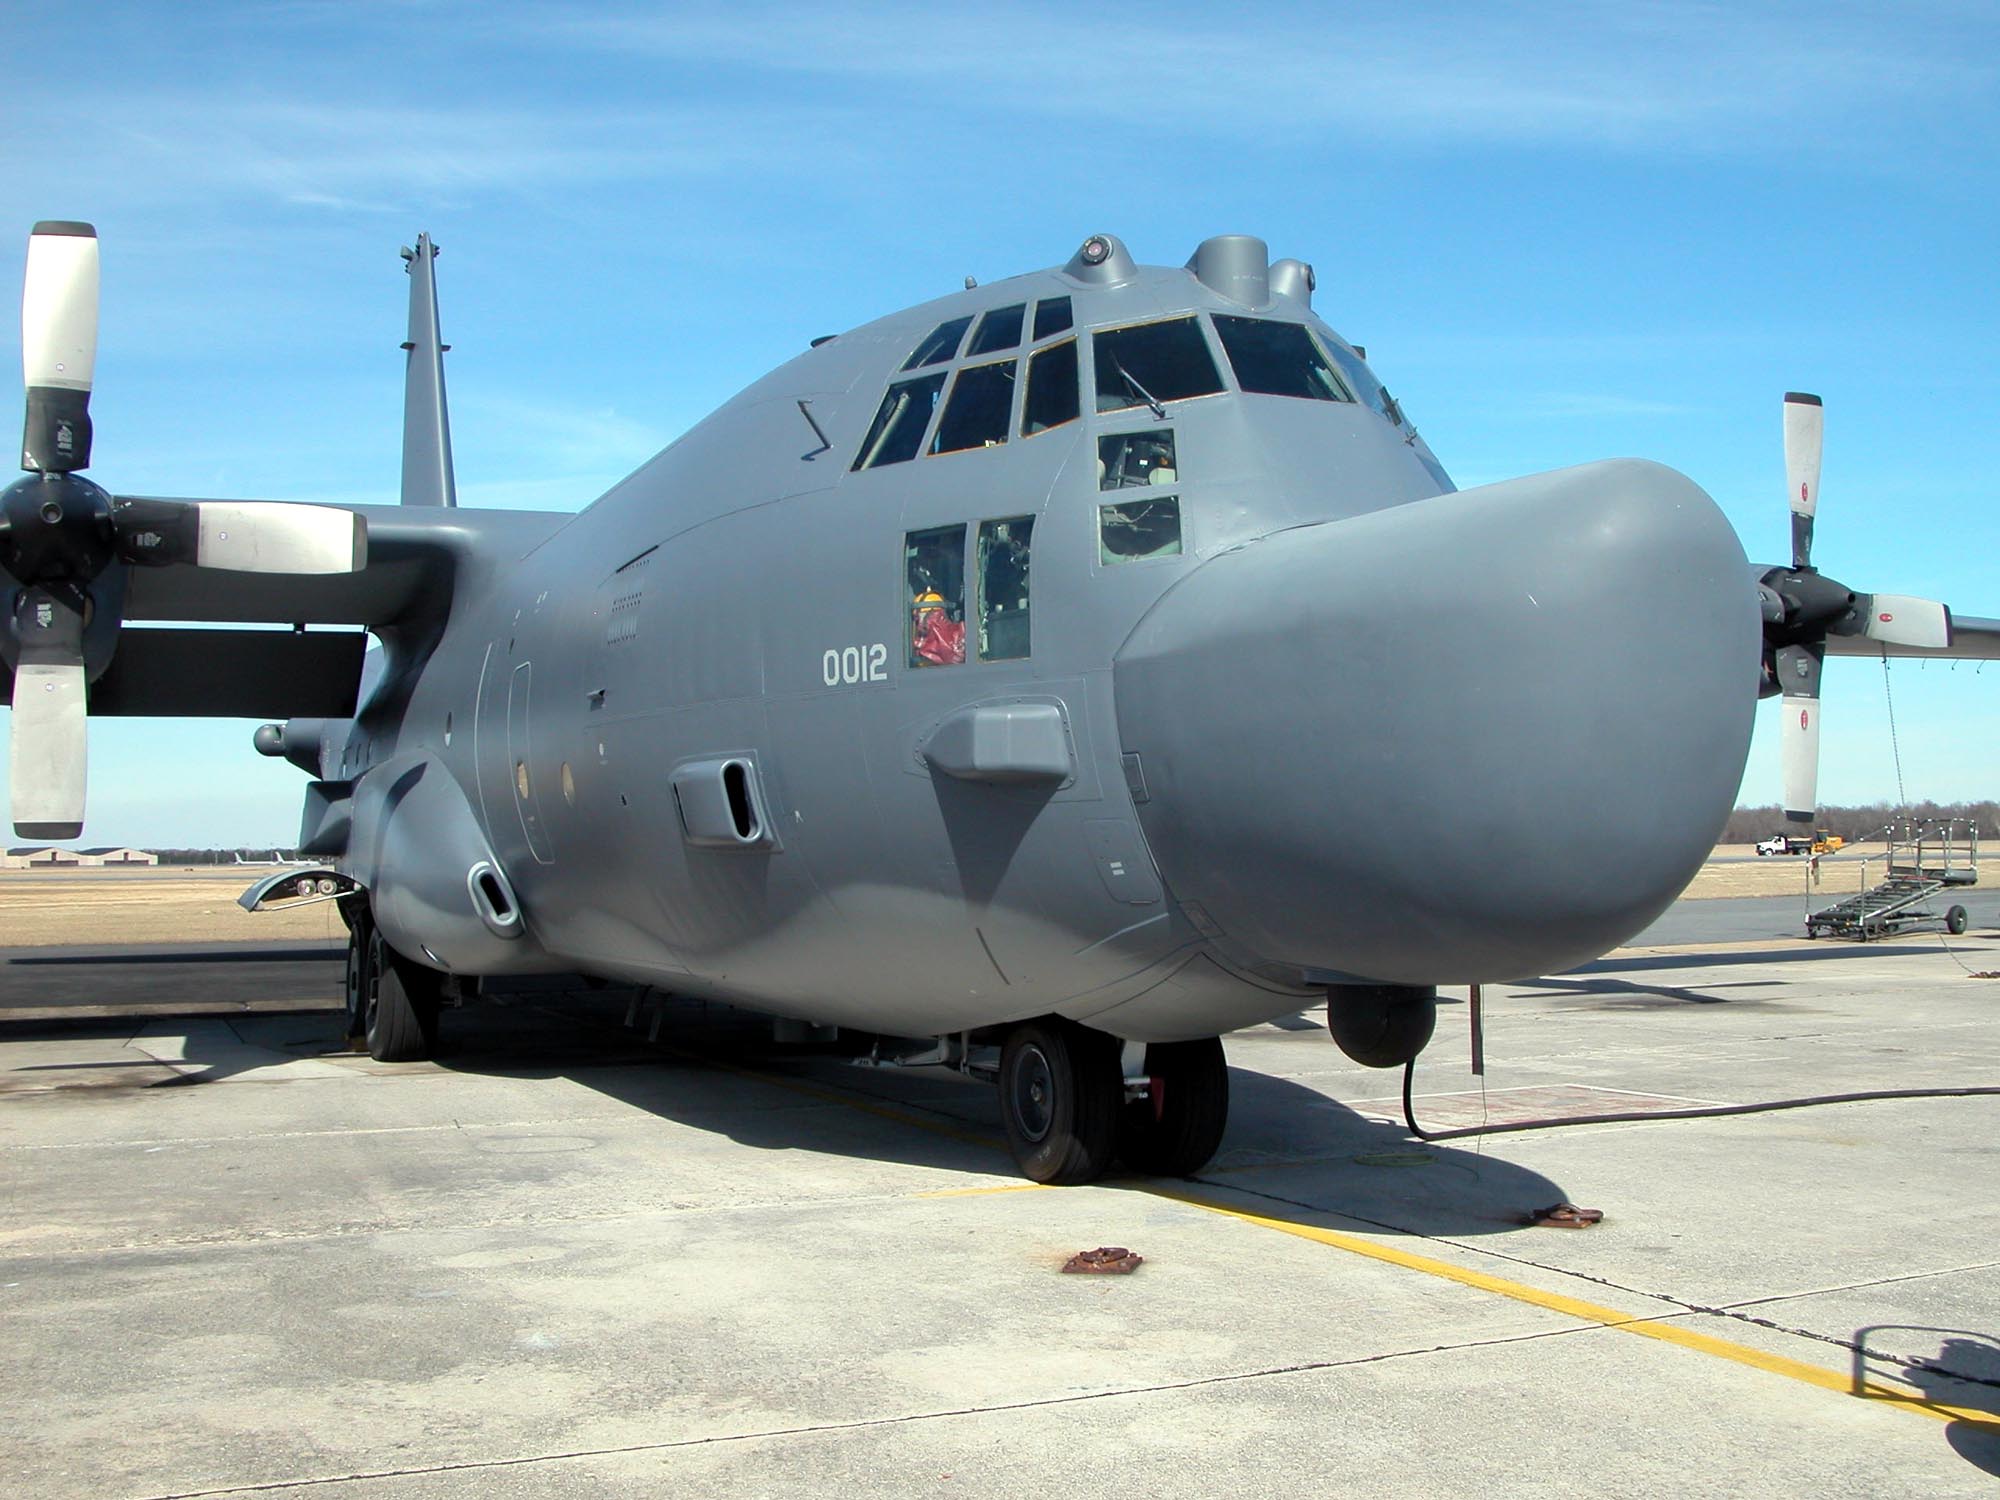 - The C-130 production branch at Robins Air Force Base, Ga